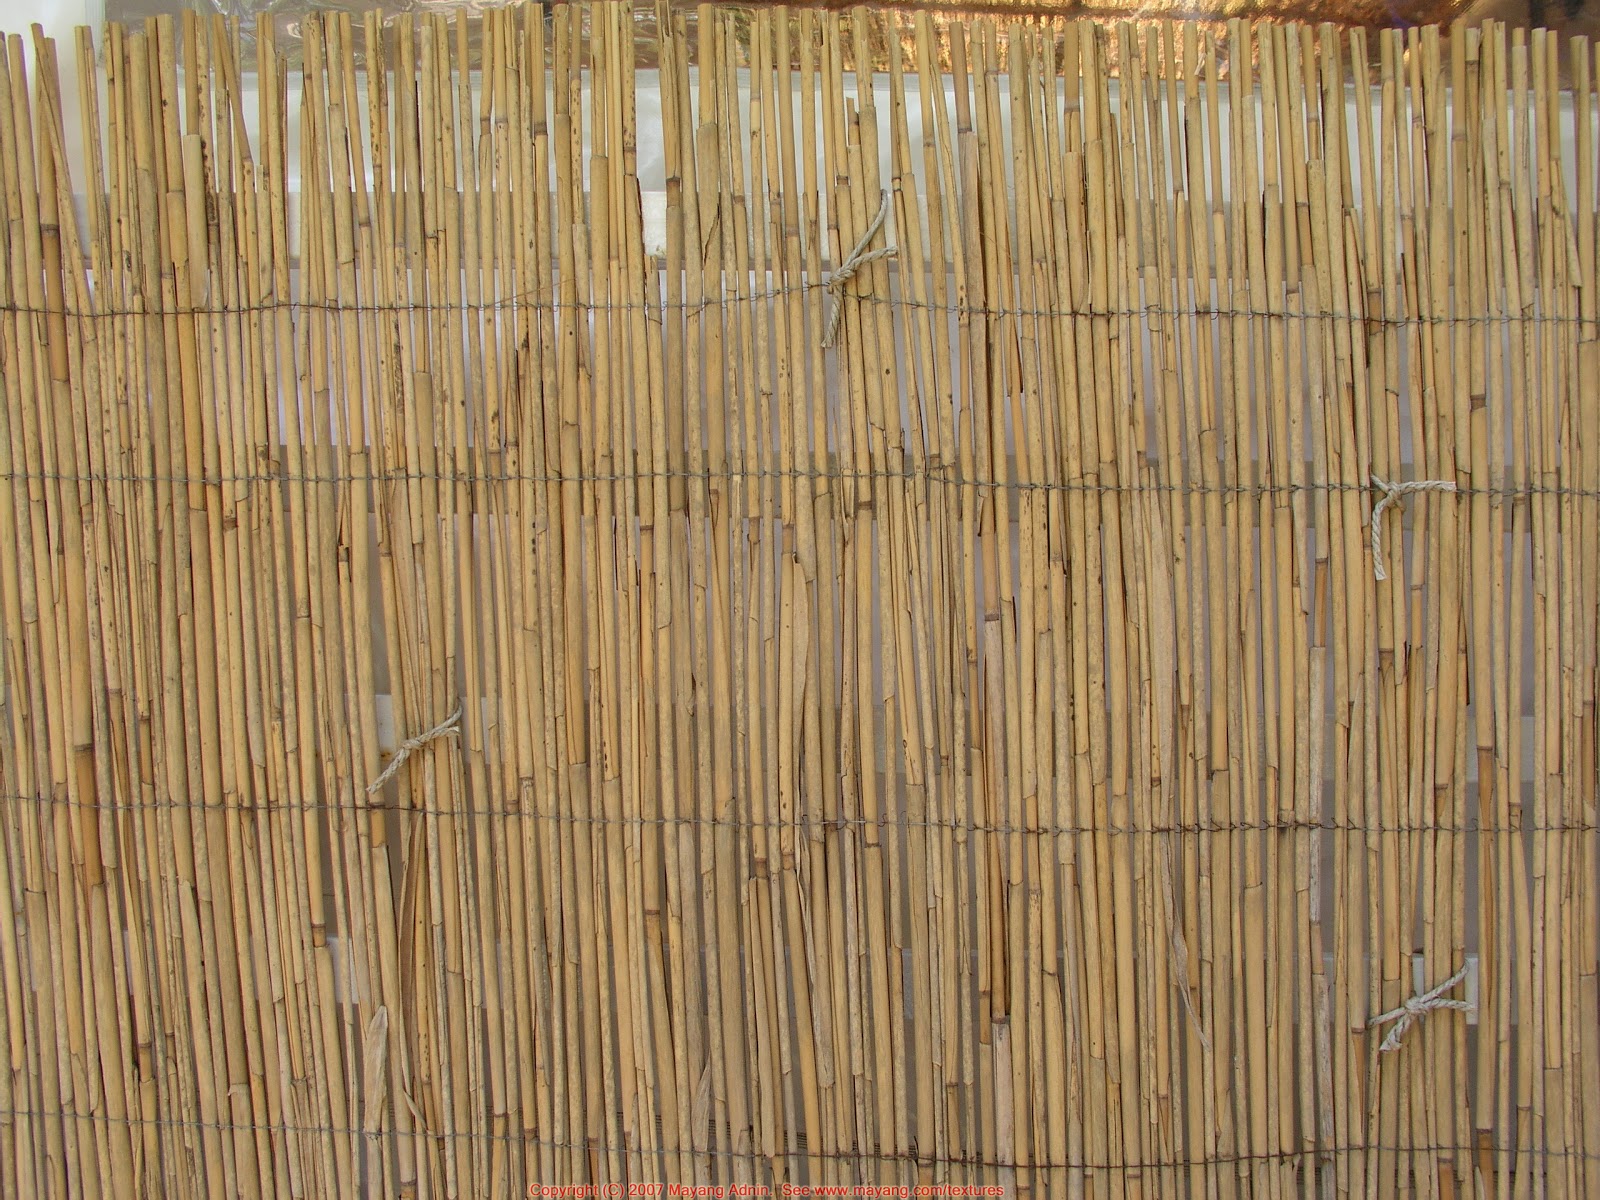 Bamboo Grove Photo: Bamboo Fence